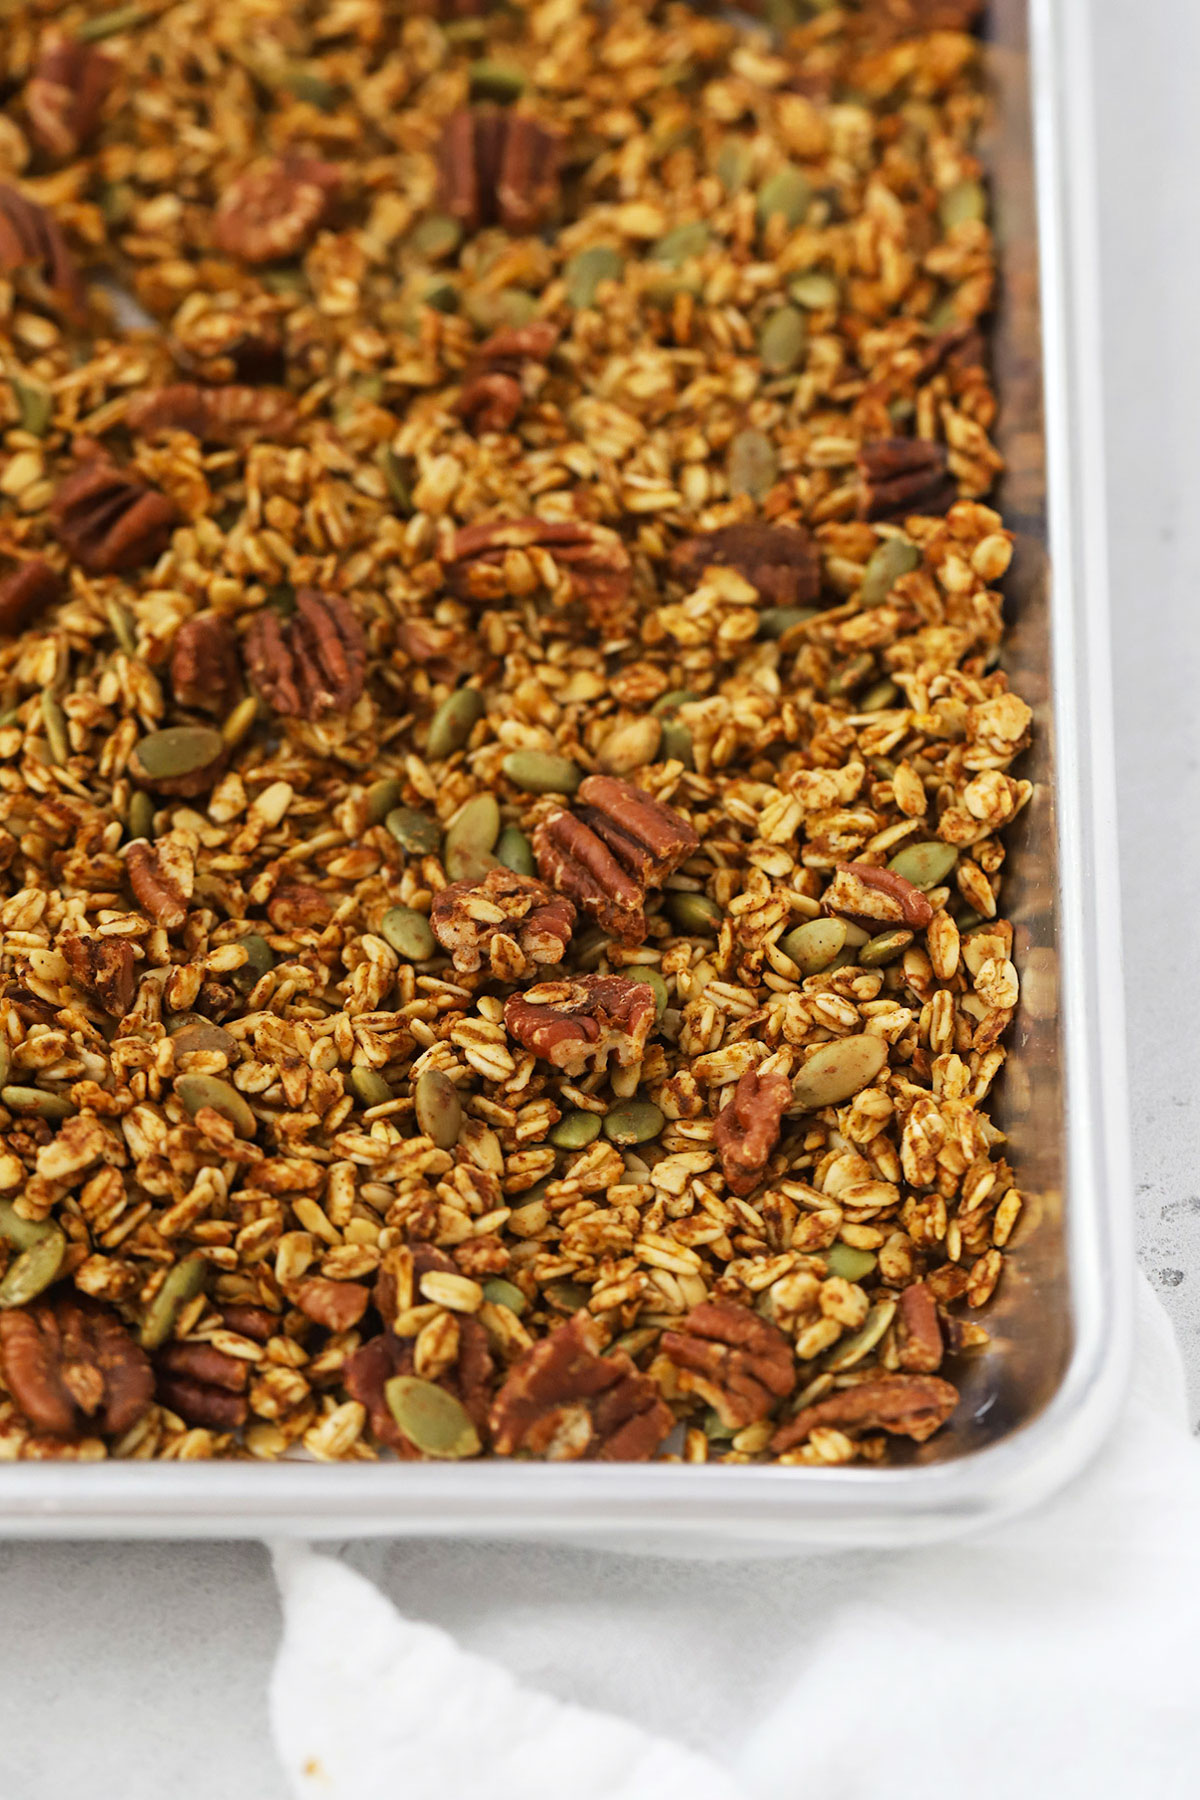 a sheet pan of homemade pumpkin granola with pecans and pumpkin seeds